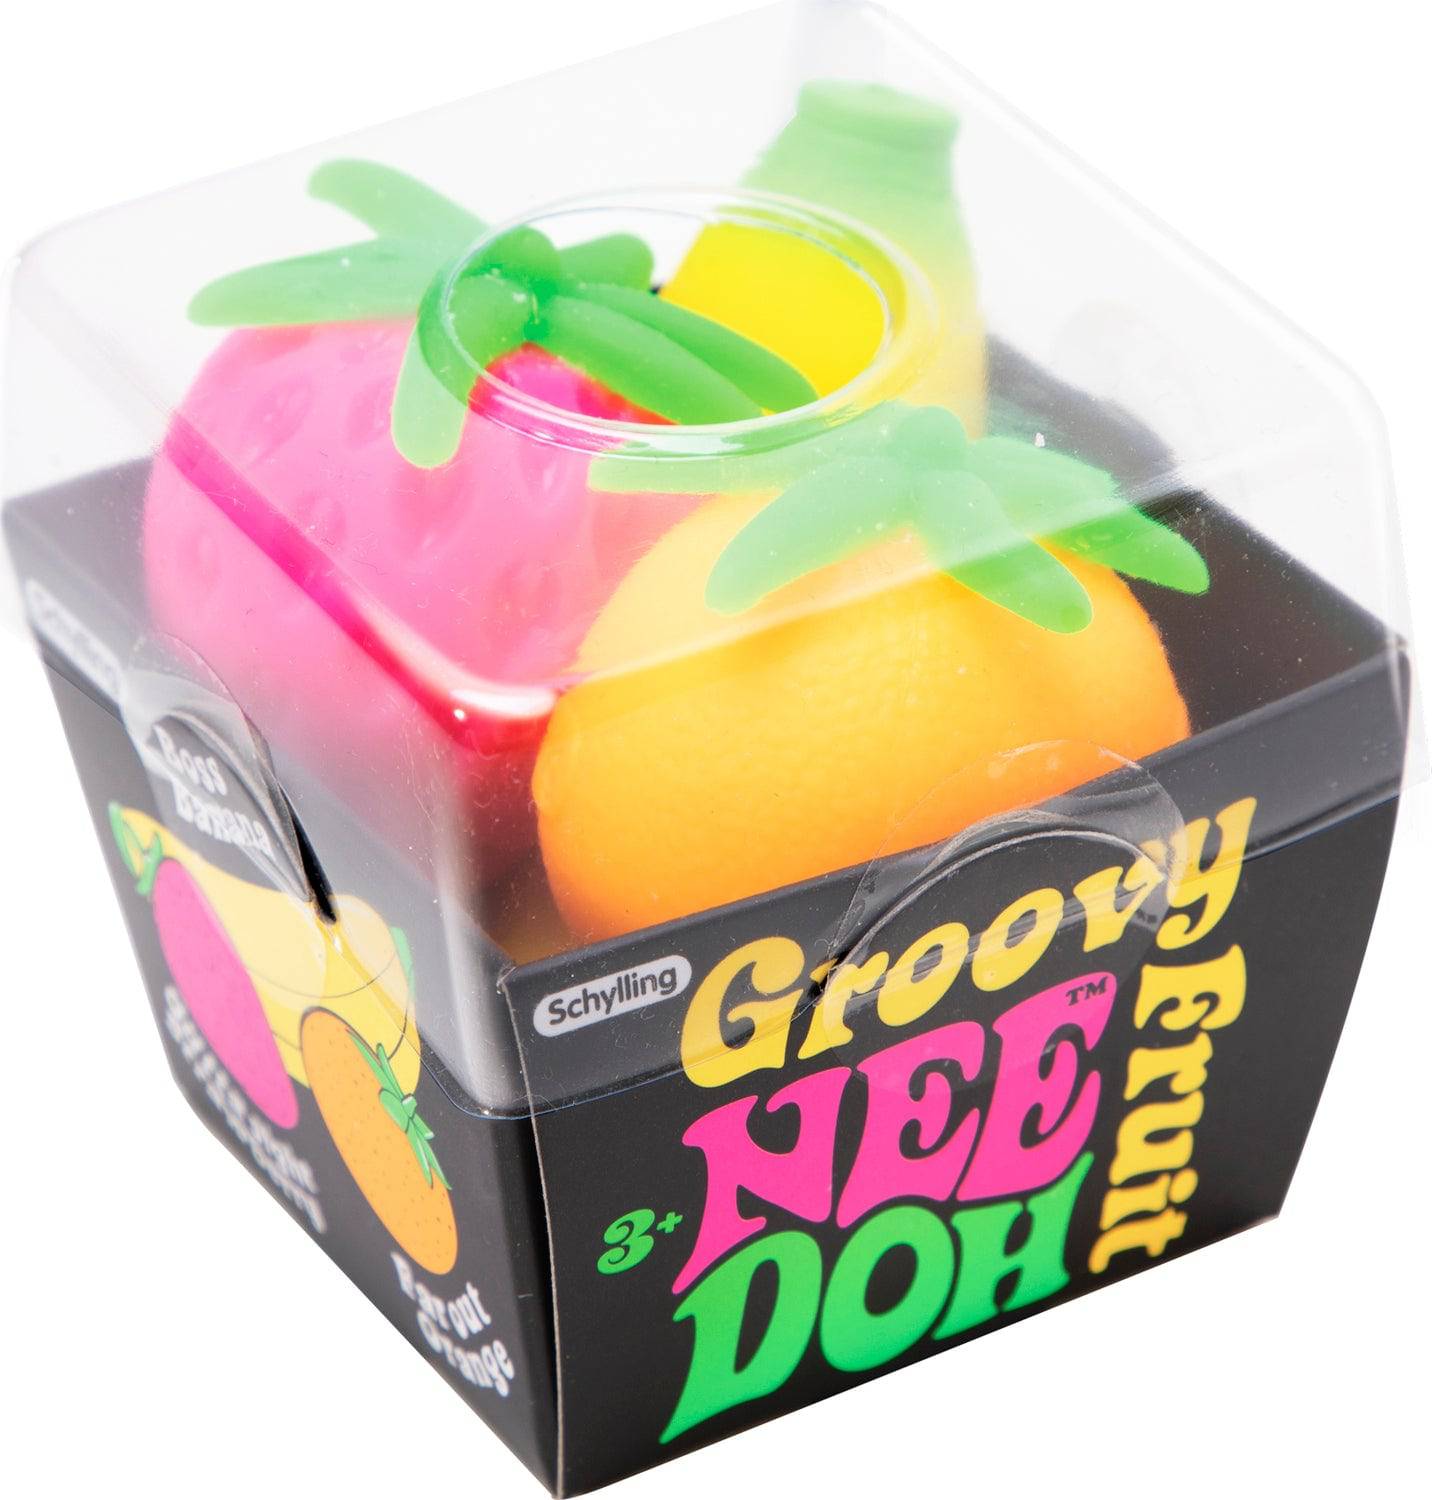 Groovy Fruit NeeDoh - A Child's Delight